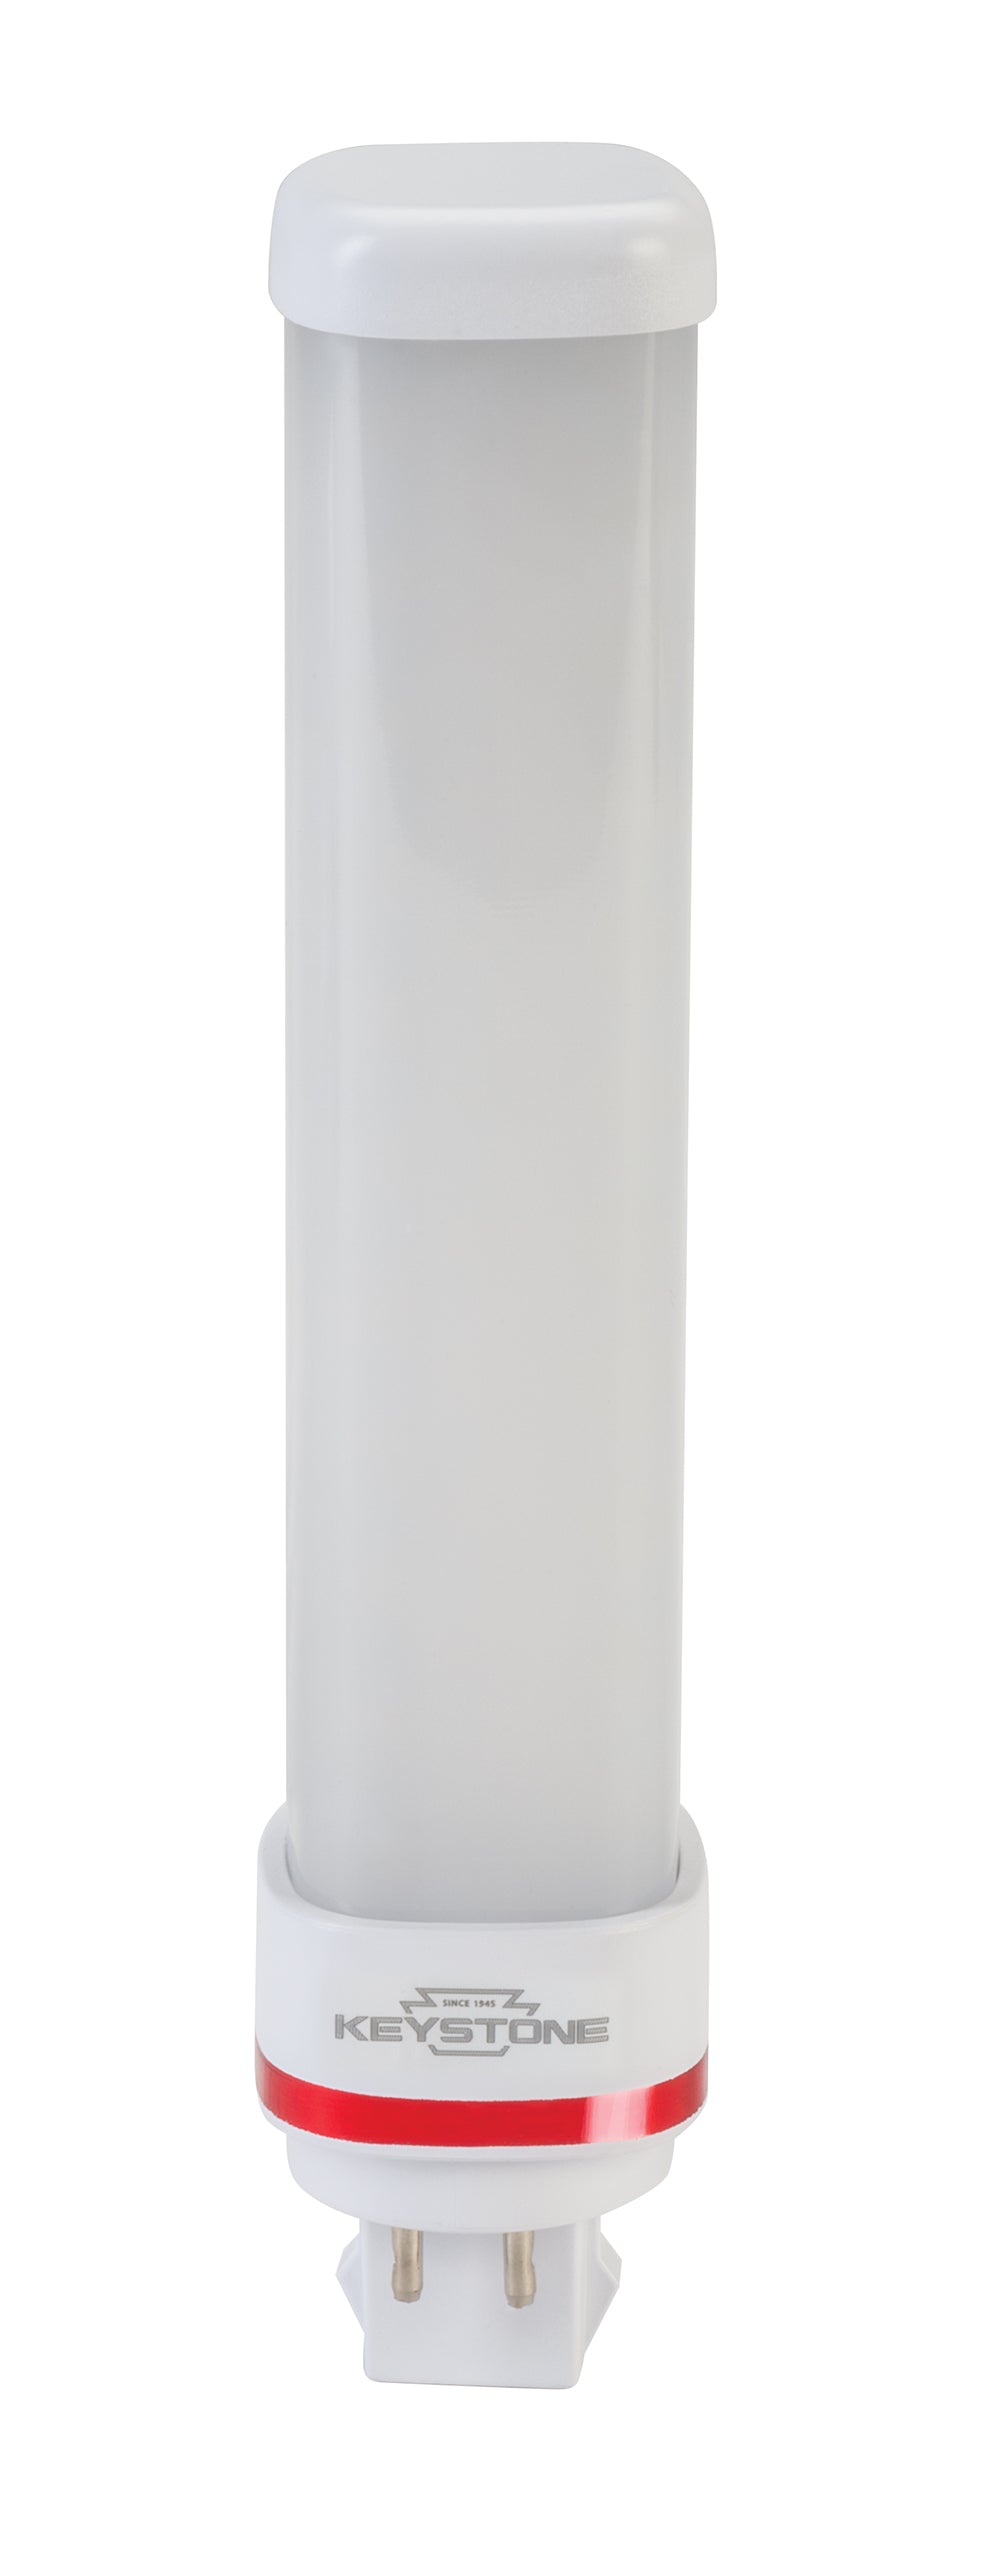 9W LED 4-Pin Compact Lamp, Horizontal Orientation, Ballast Compatible, G24q Base, 3000K, 6 pcs cartons, Individually Sleeved (Pack of 24)